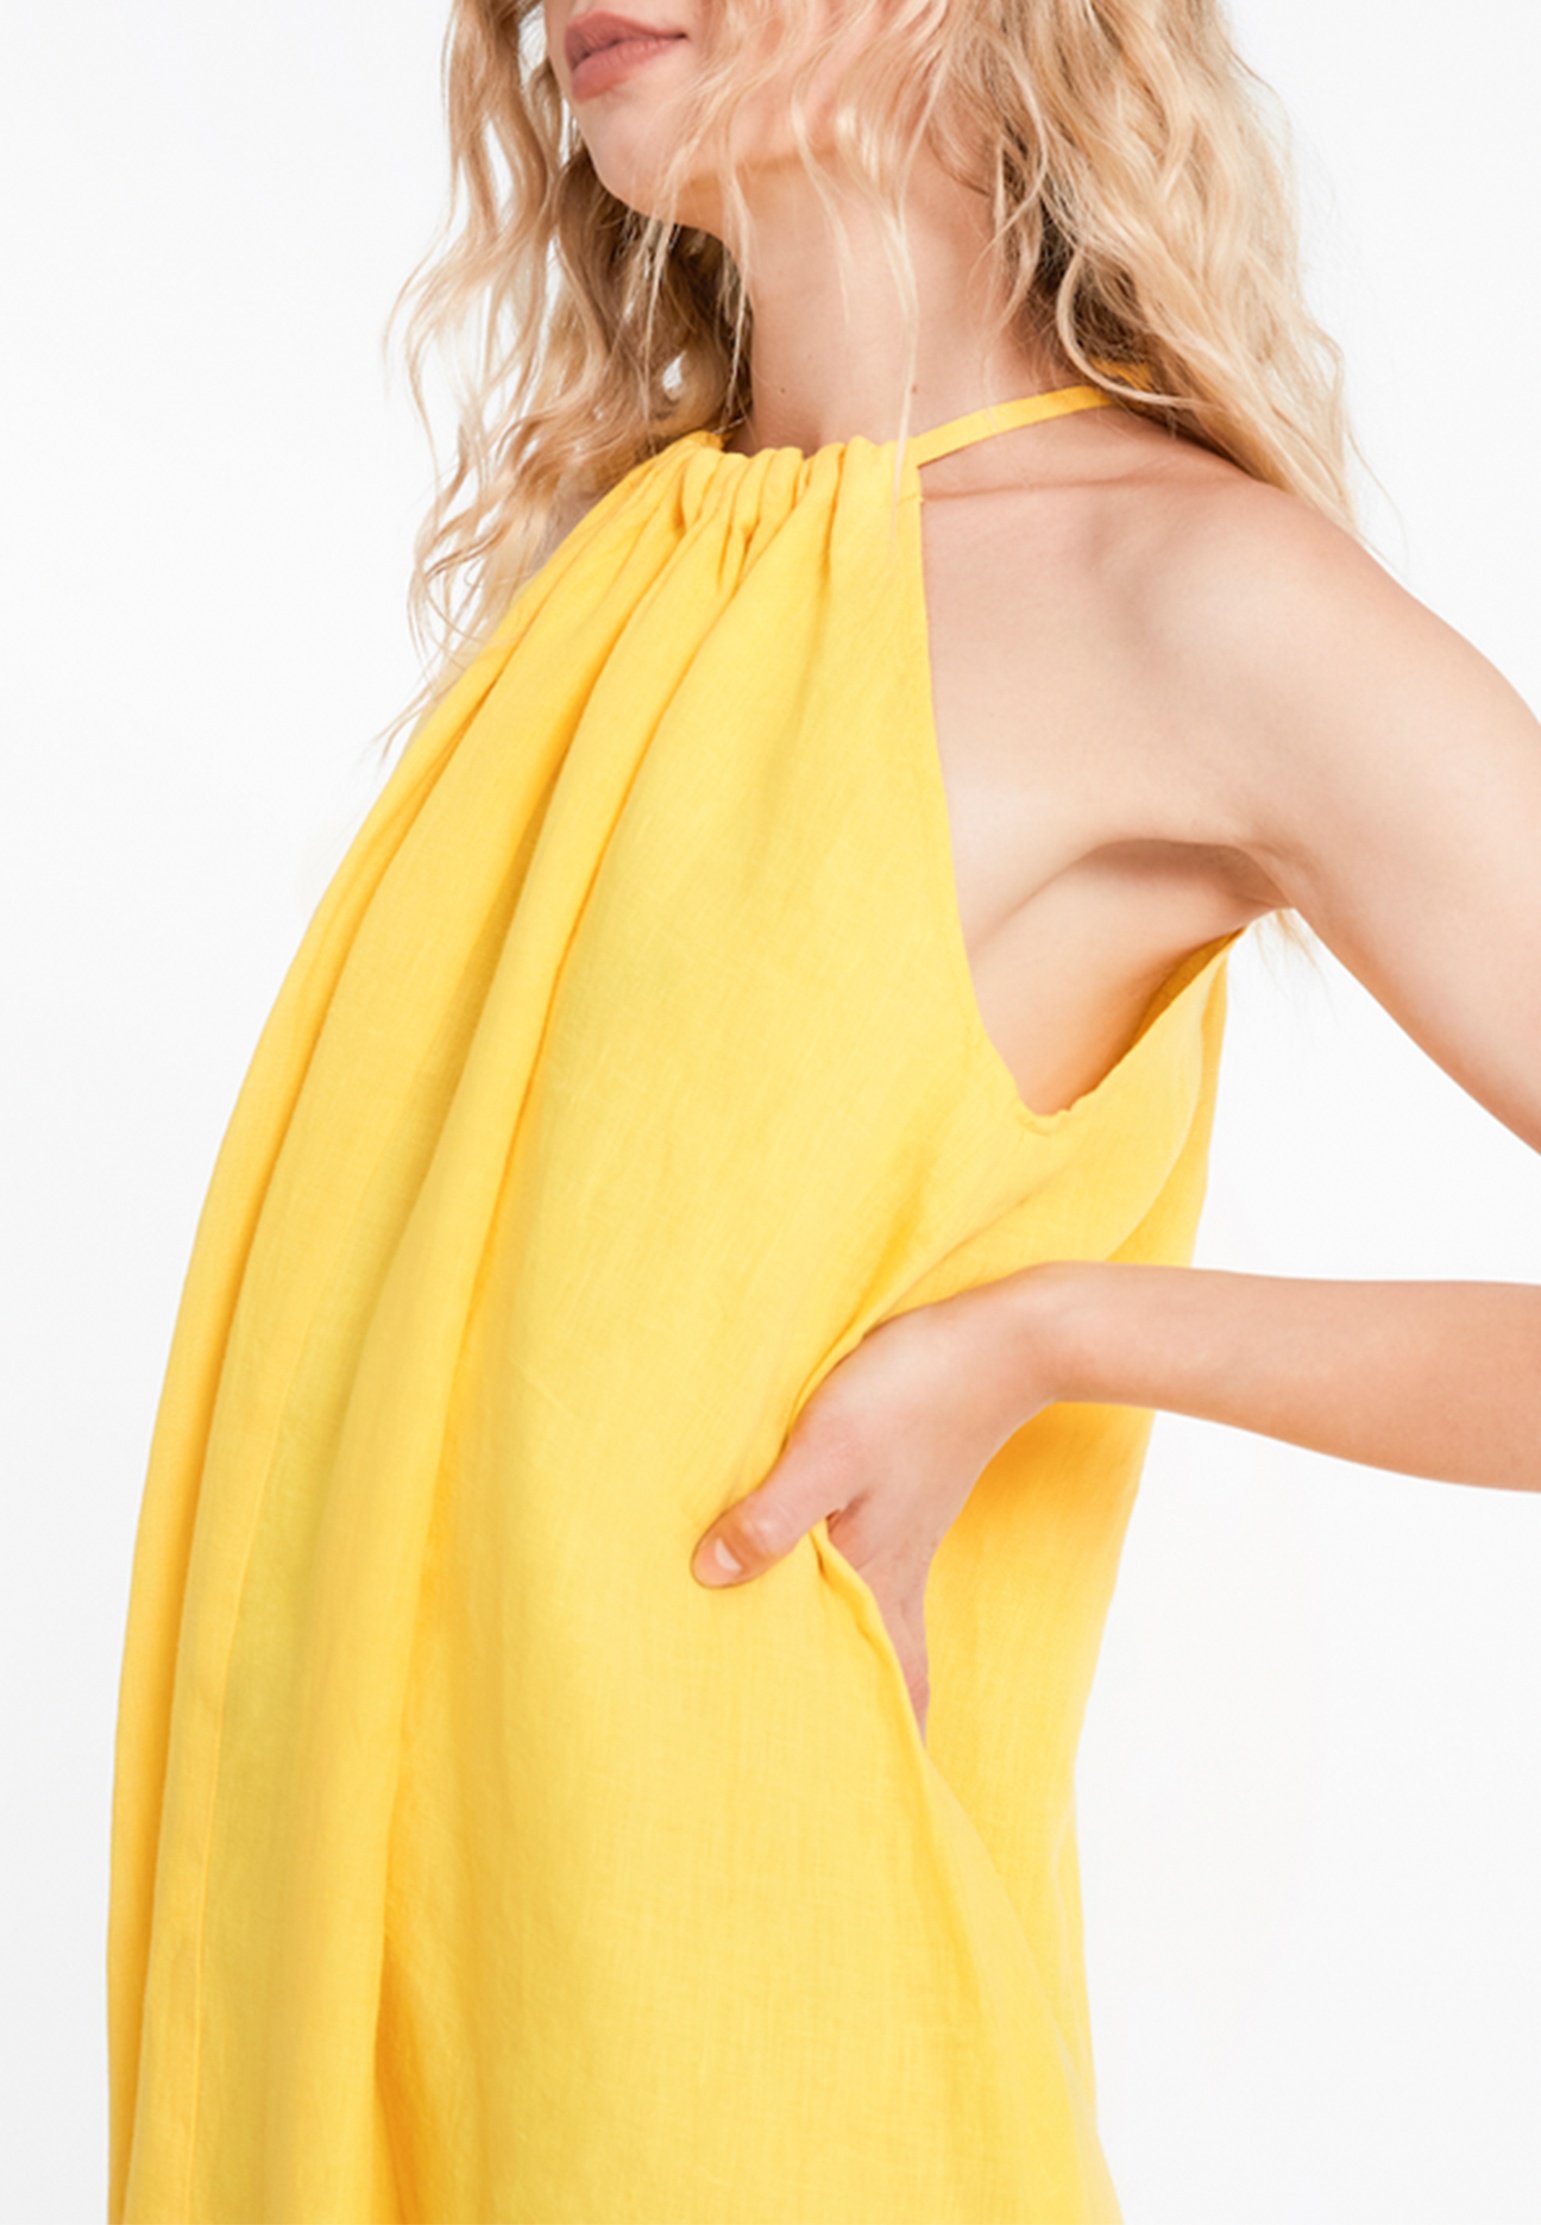 Dress MAIA BERGMAN Color: yellow (Code: 1027) in online store Allure